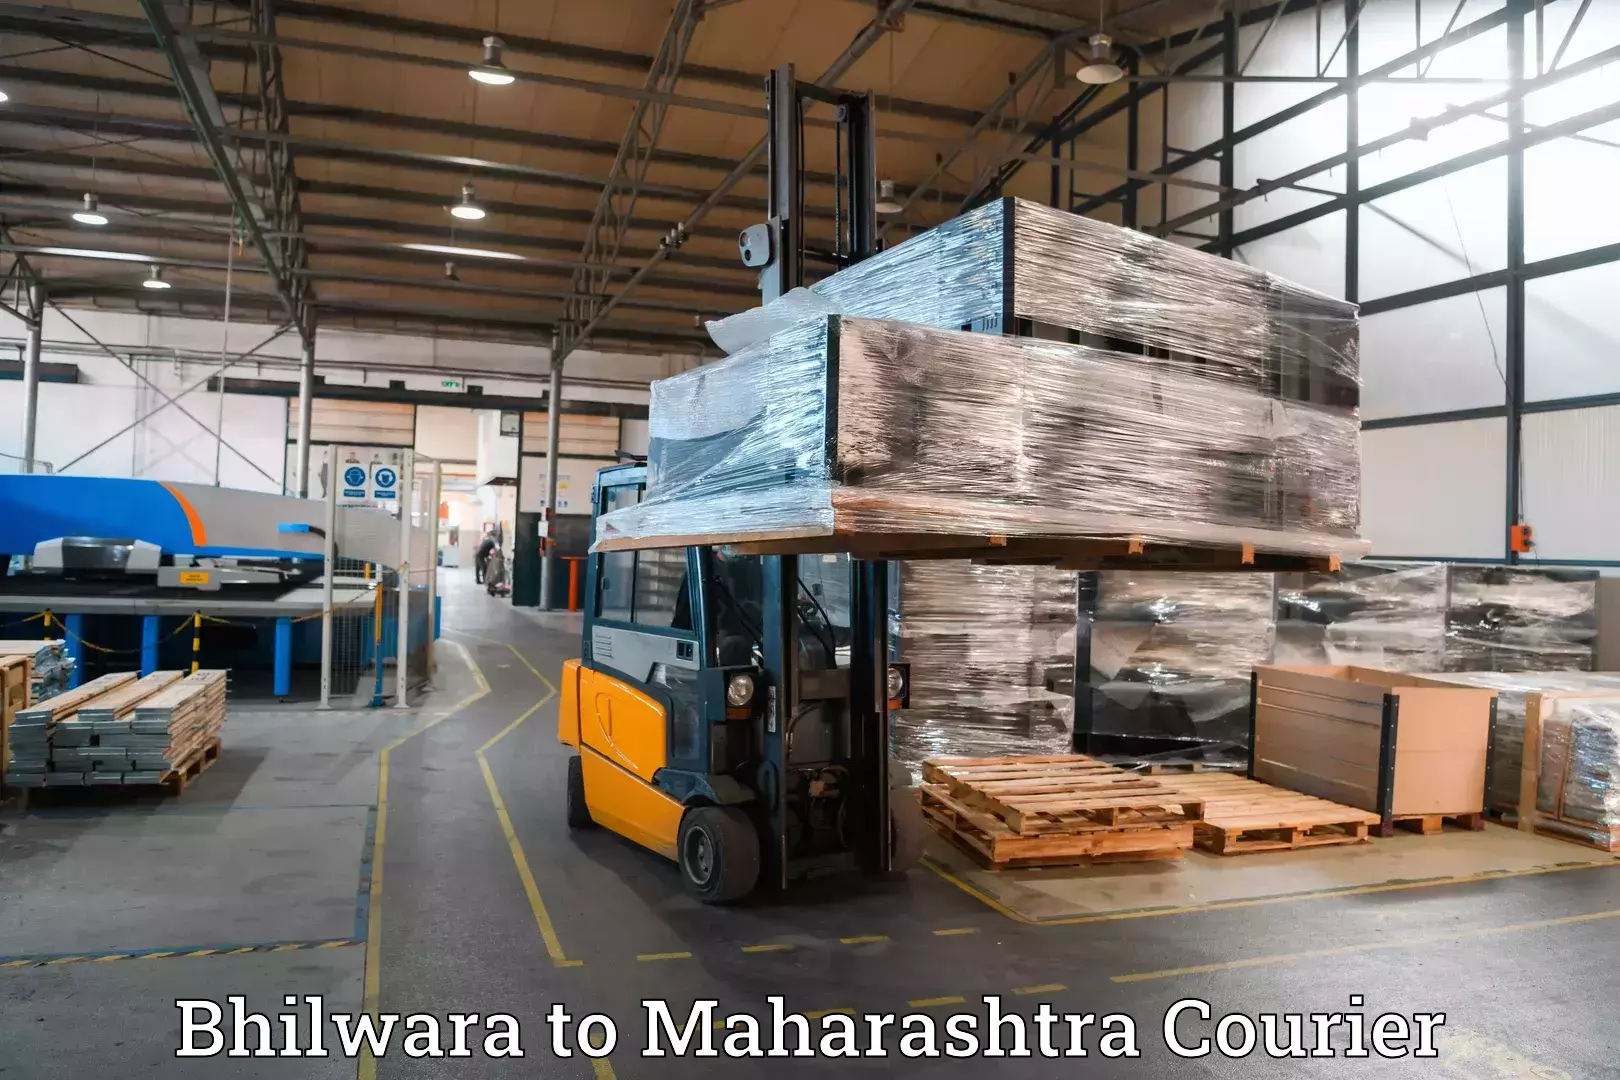 Baggage shipping service Bhilwara to Mahabaleshwar